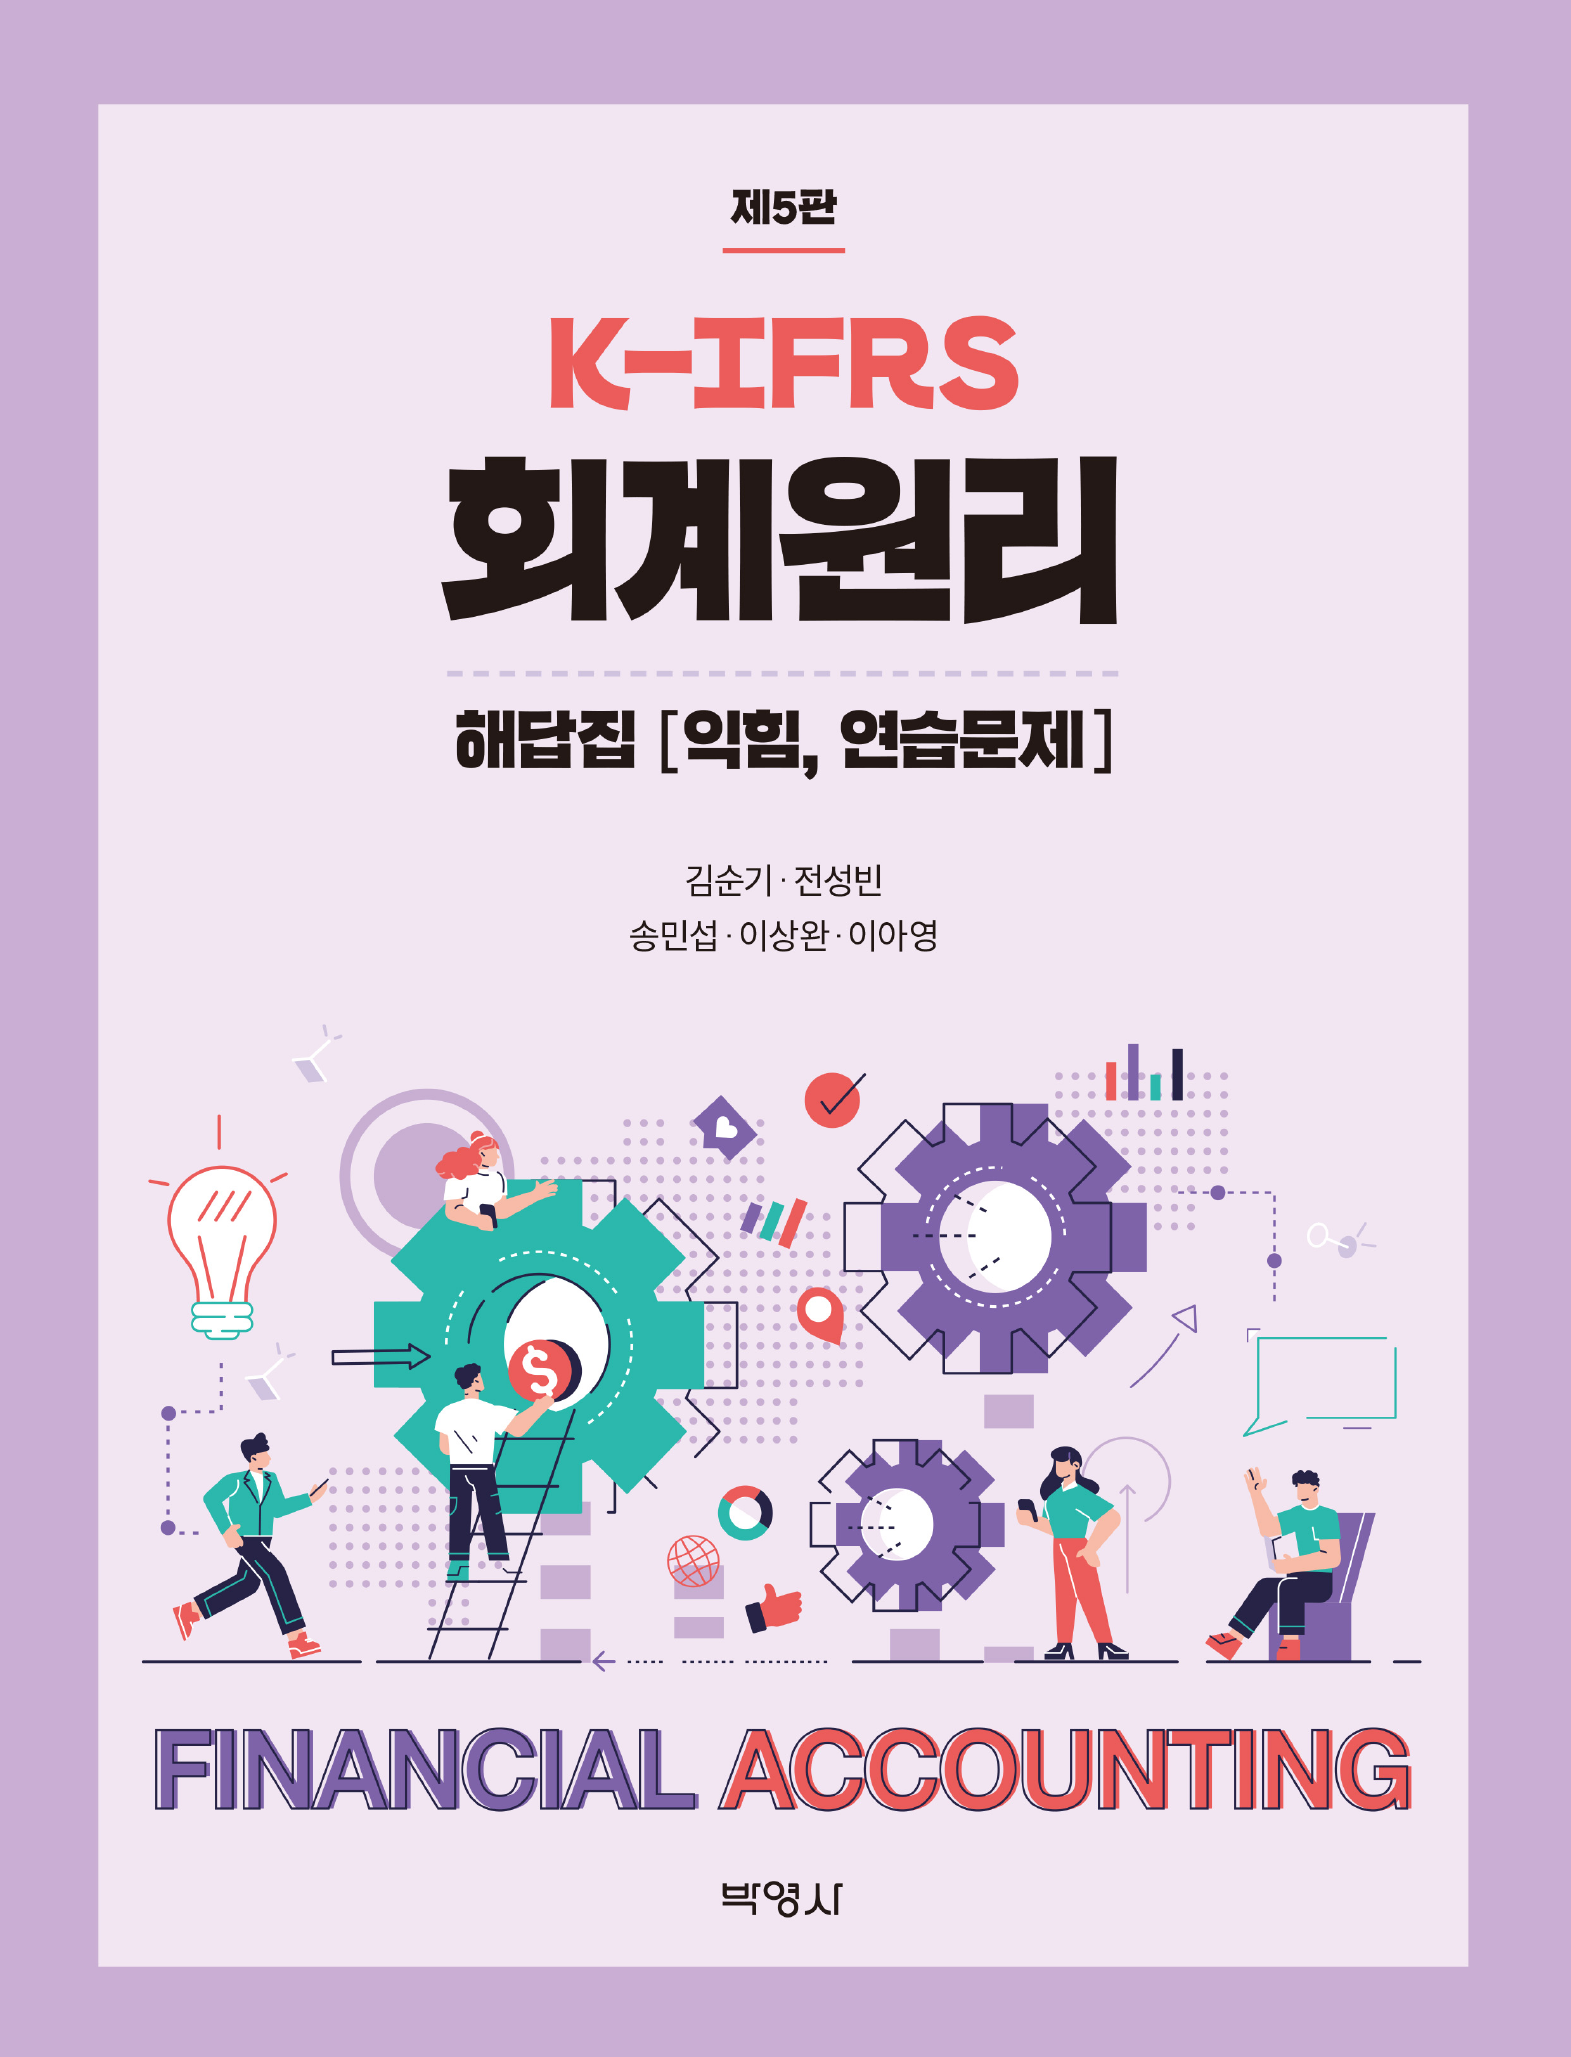 K-IFRS 회계원리 해답집 익힘, 연습문제 5판